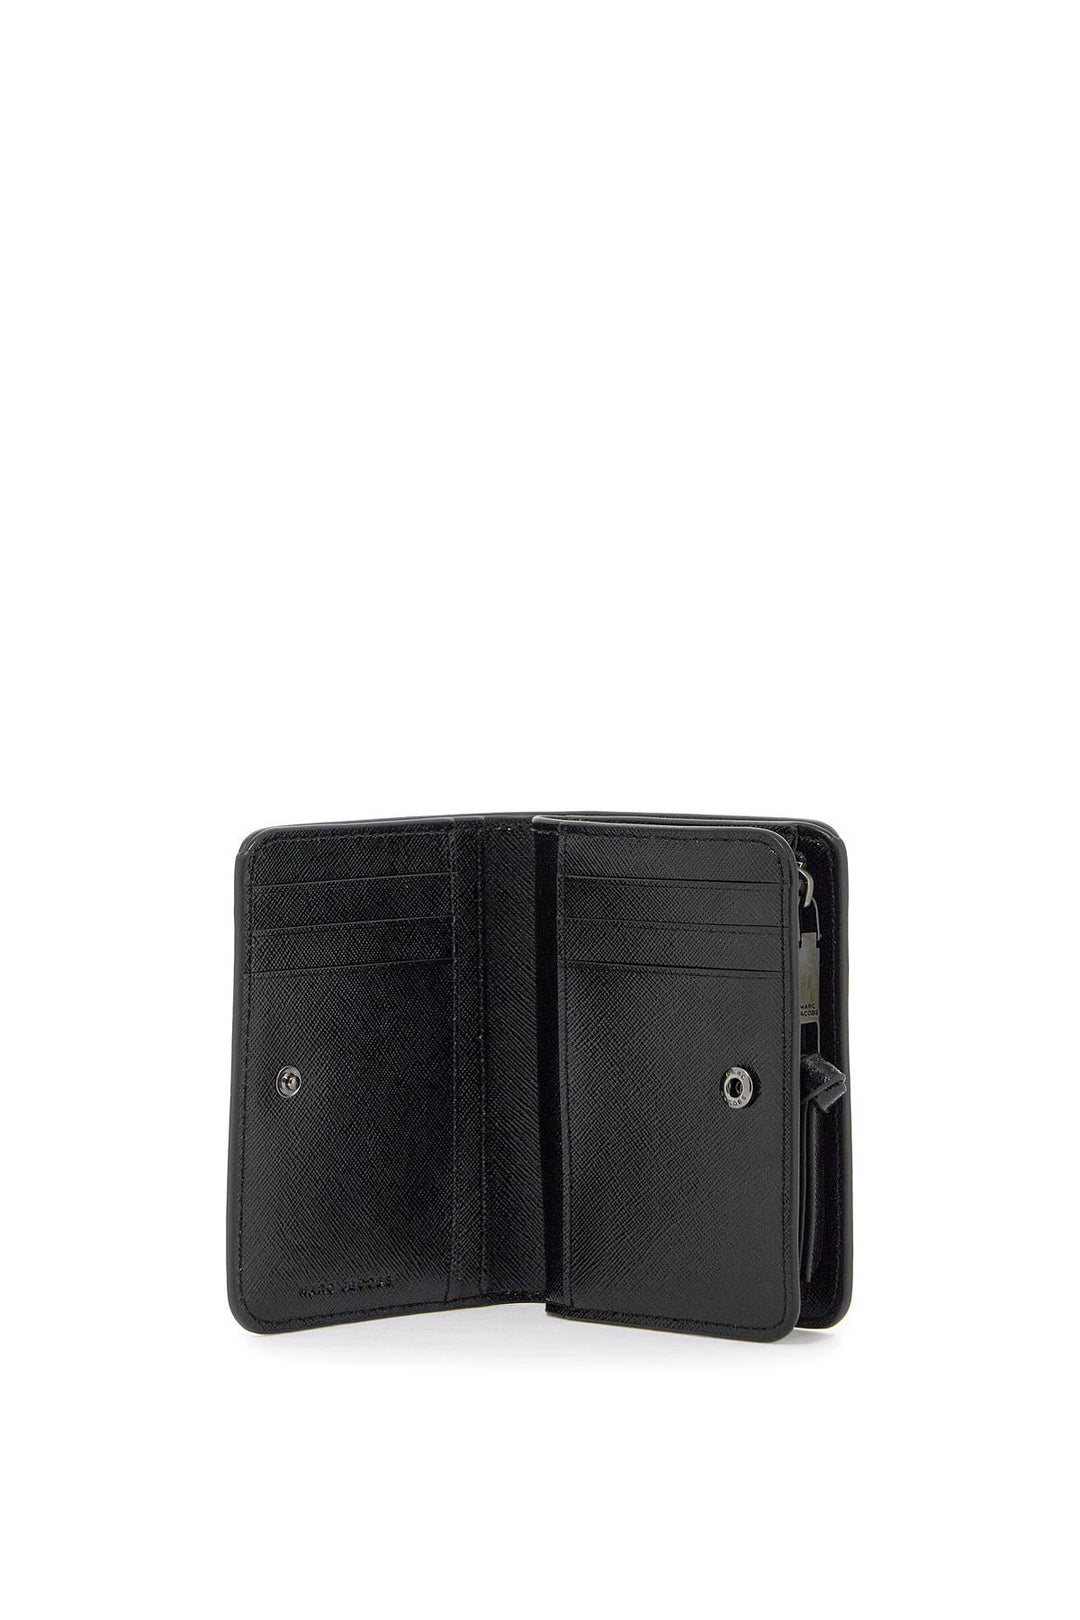 Marc Jacobs The Utility Snapshot Mini Compact Wallet   Black